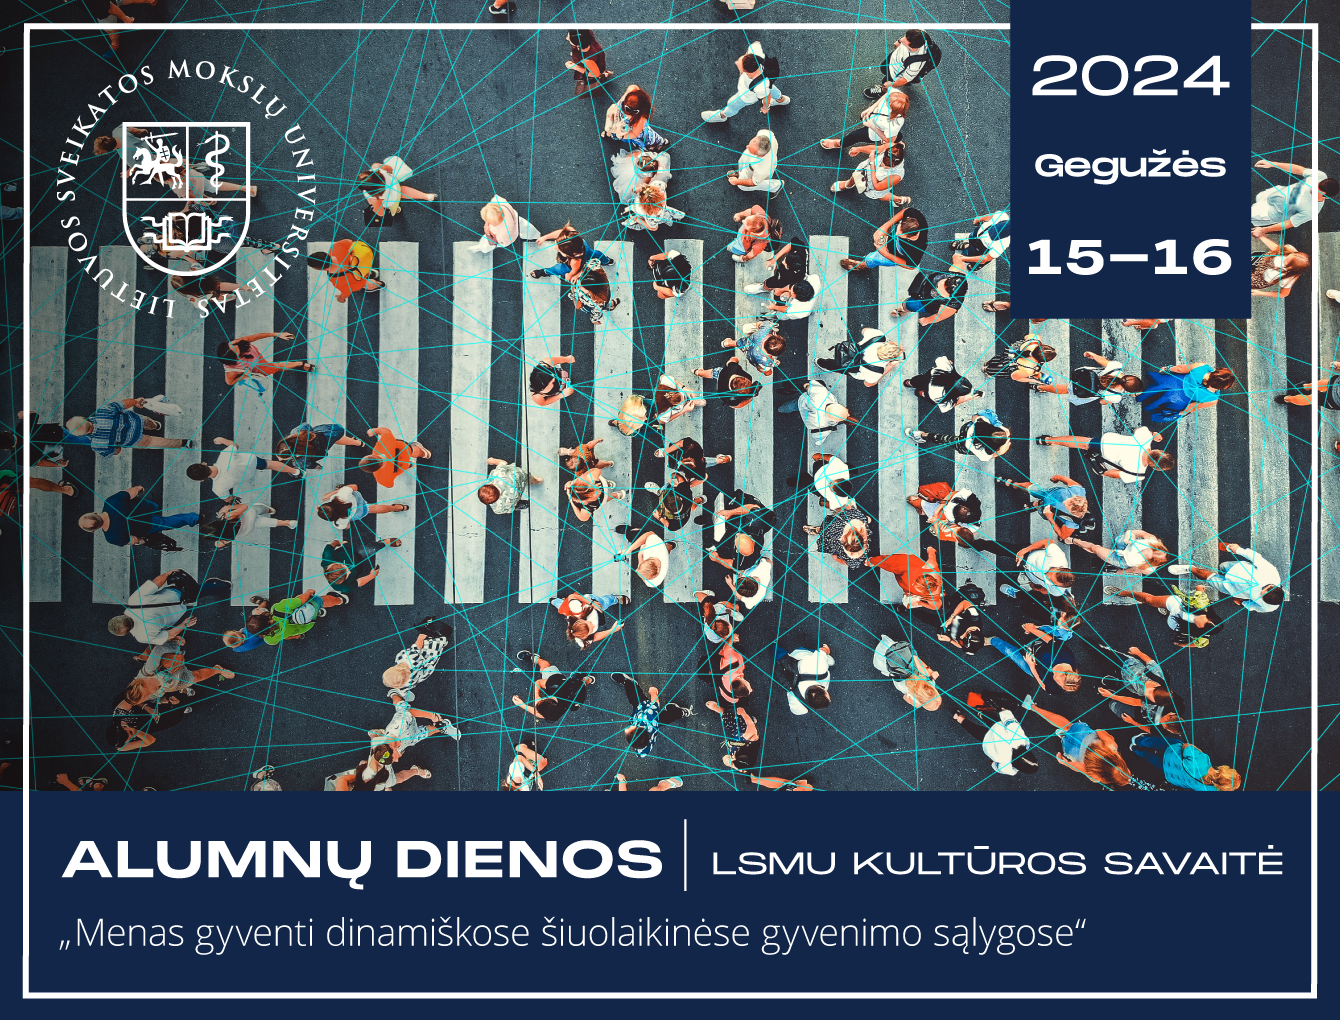 LSMU Kultūros-savaitė 2024 - Alumni dienos